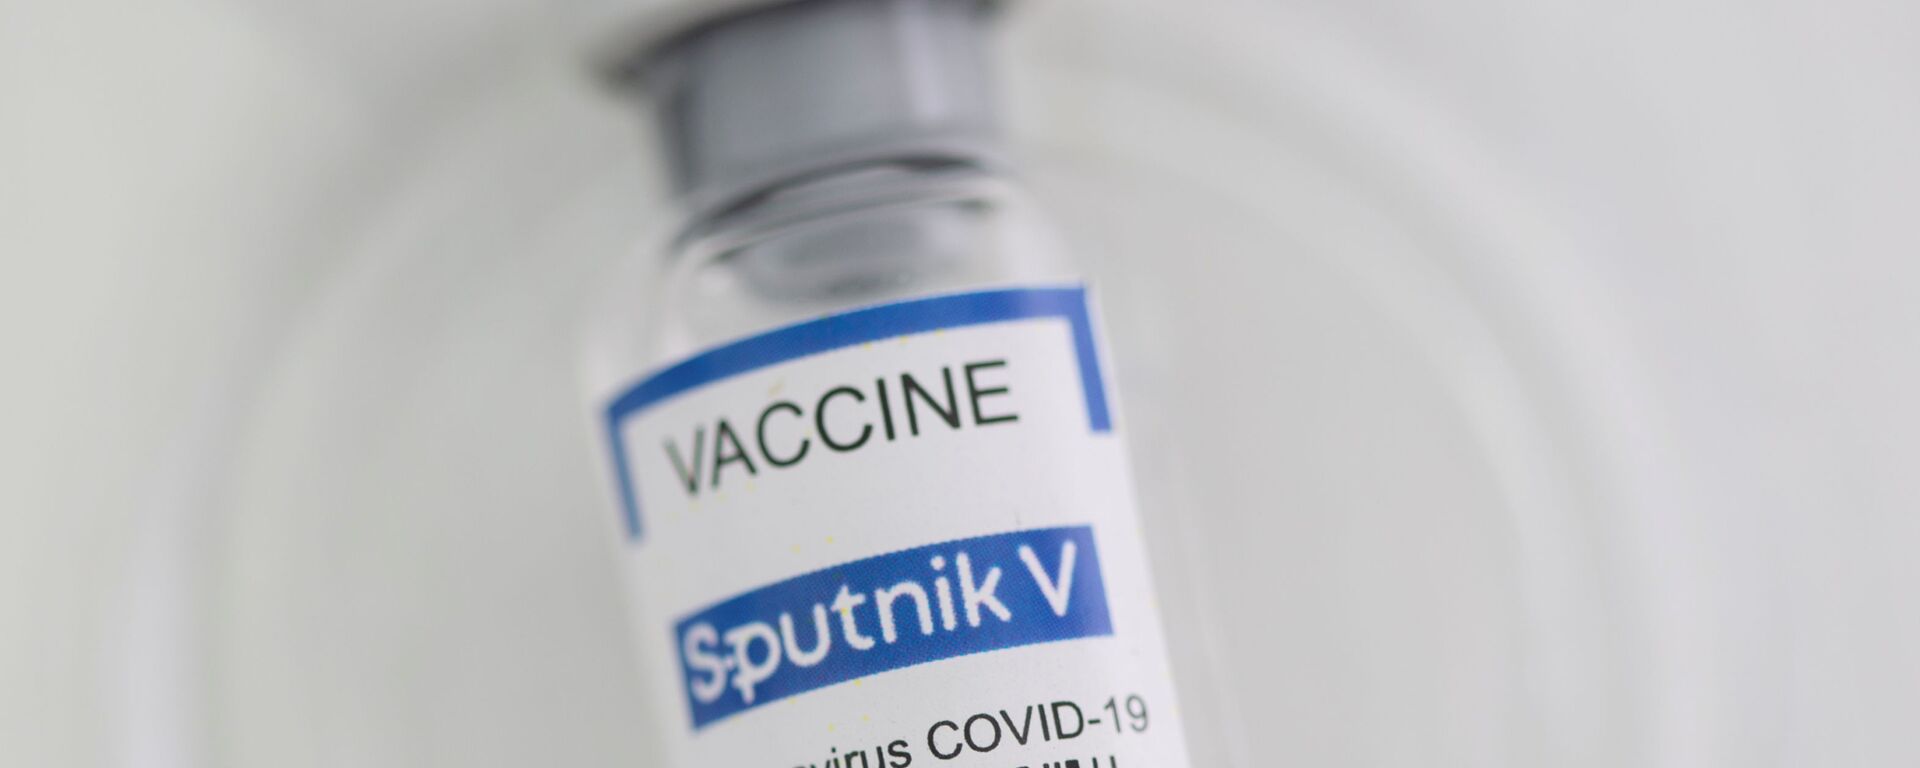 A vial labelled Sputnik V coronavirus disease (COVID-19) vaccine is seen in this illustration picture taken on 2 May 2021. - Sputnik International, 1920, 28.12.2021